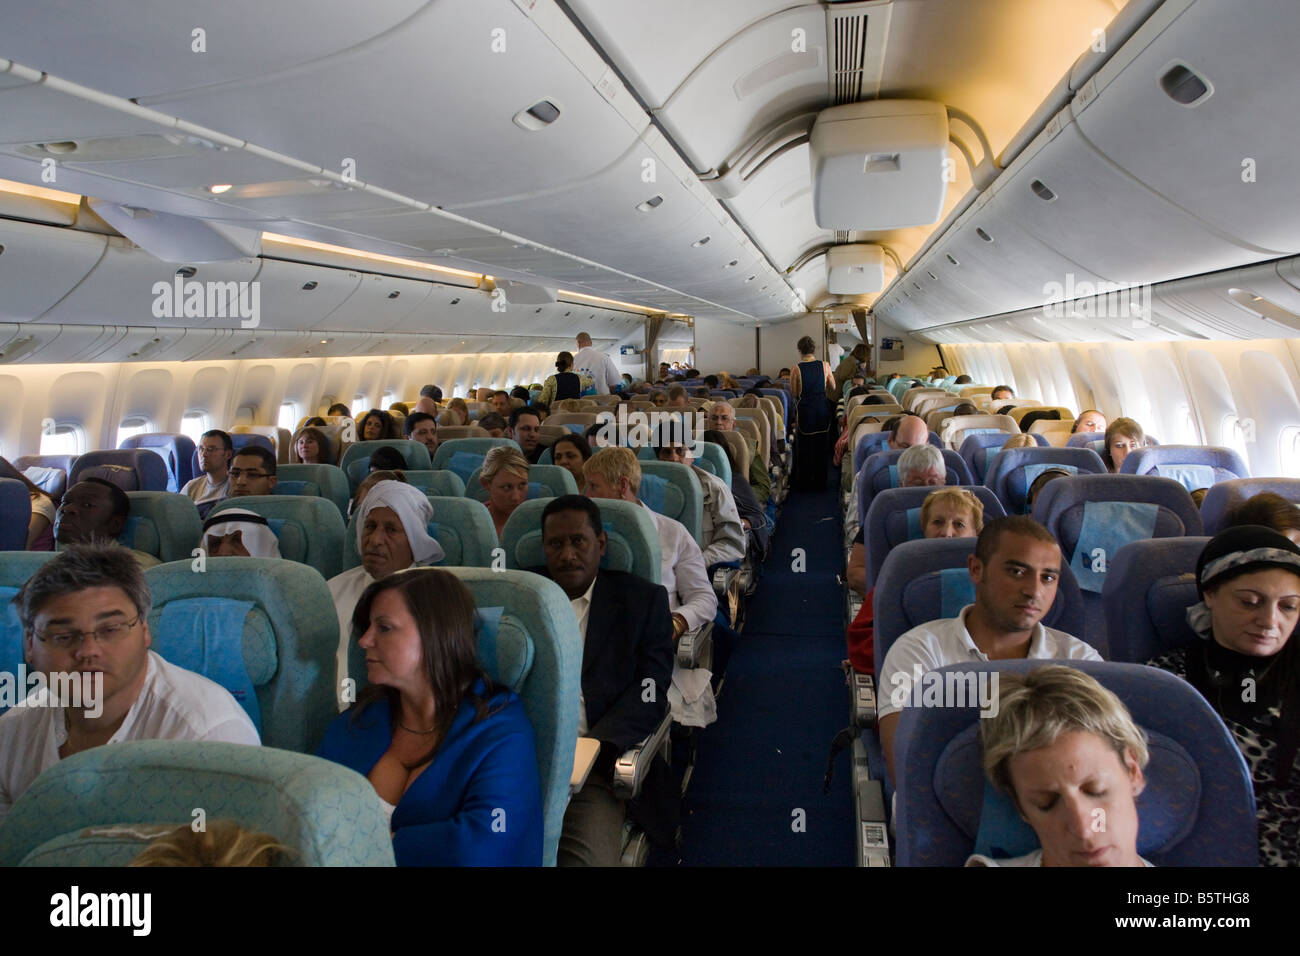 passengers in economy class cabin, Egypt Air flight Stock Photo